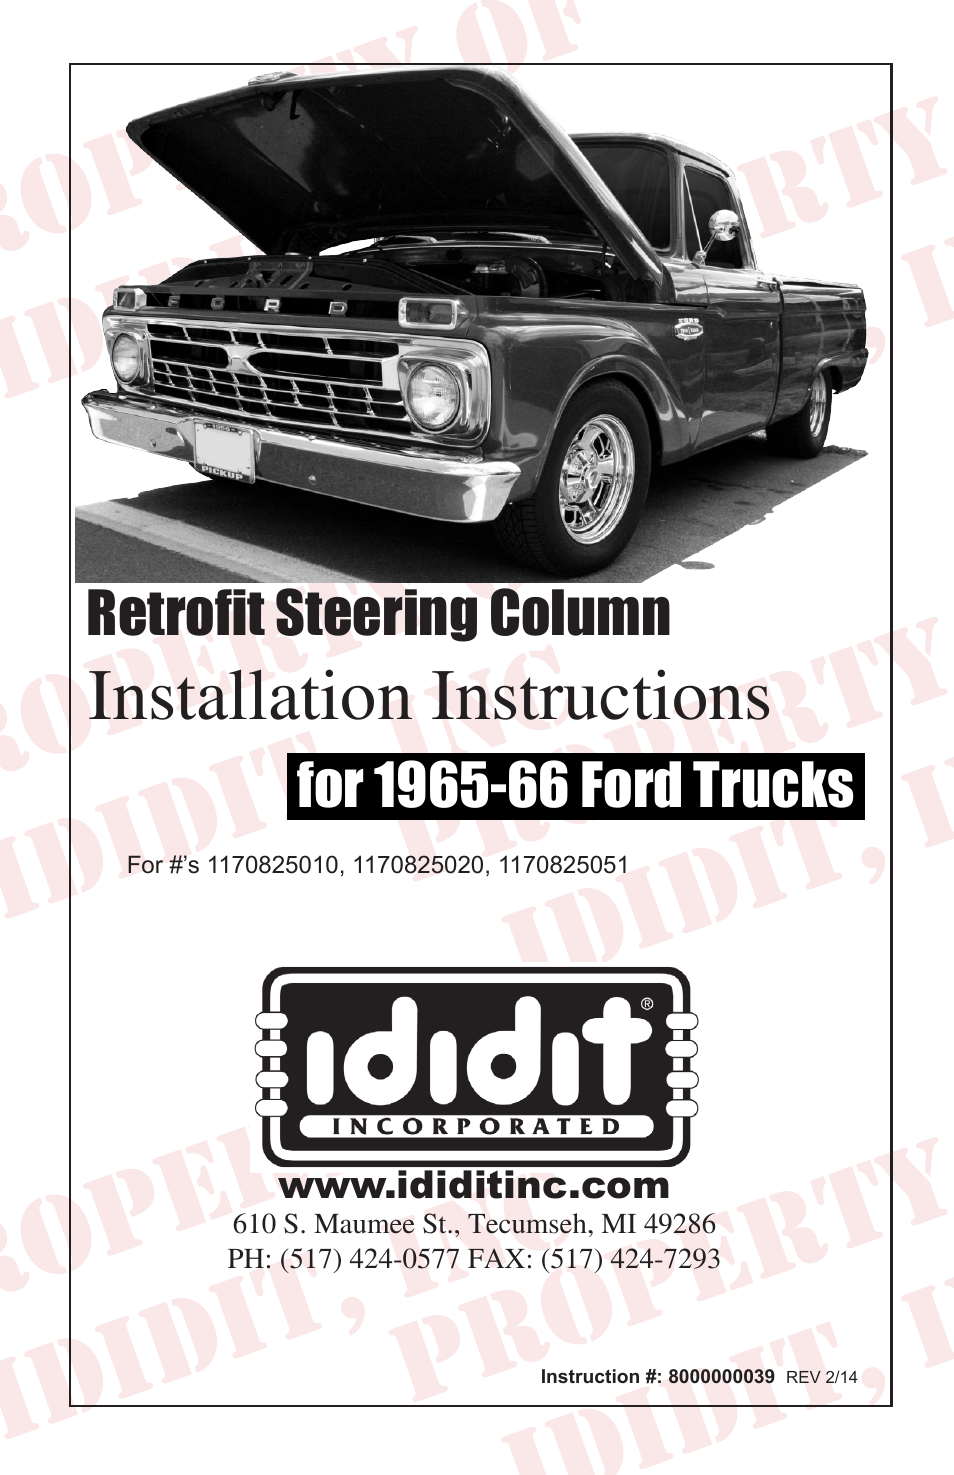 Retrofit Steering Column: 1965-66 Ford Truck